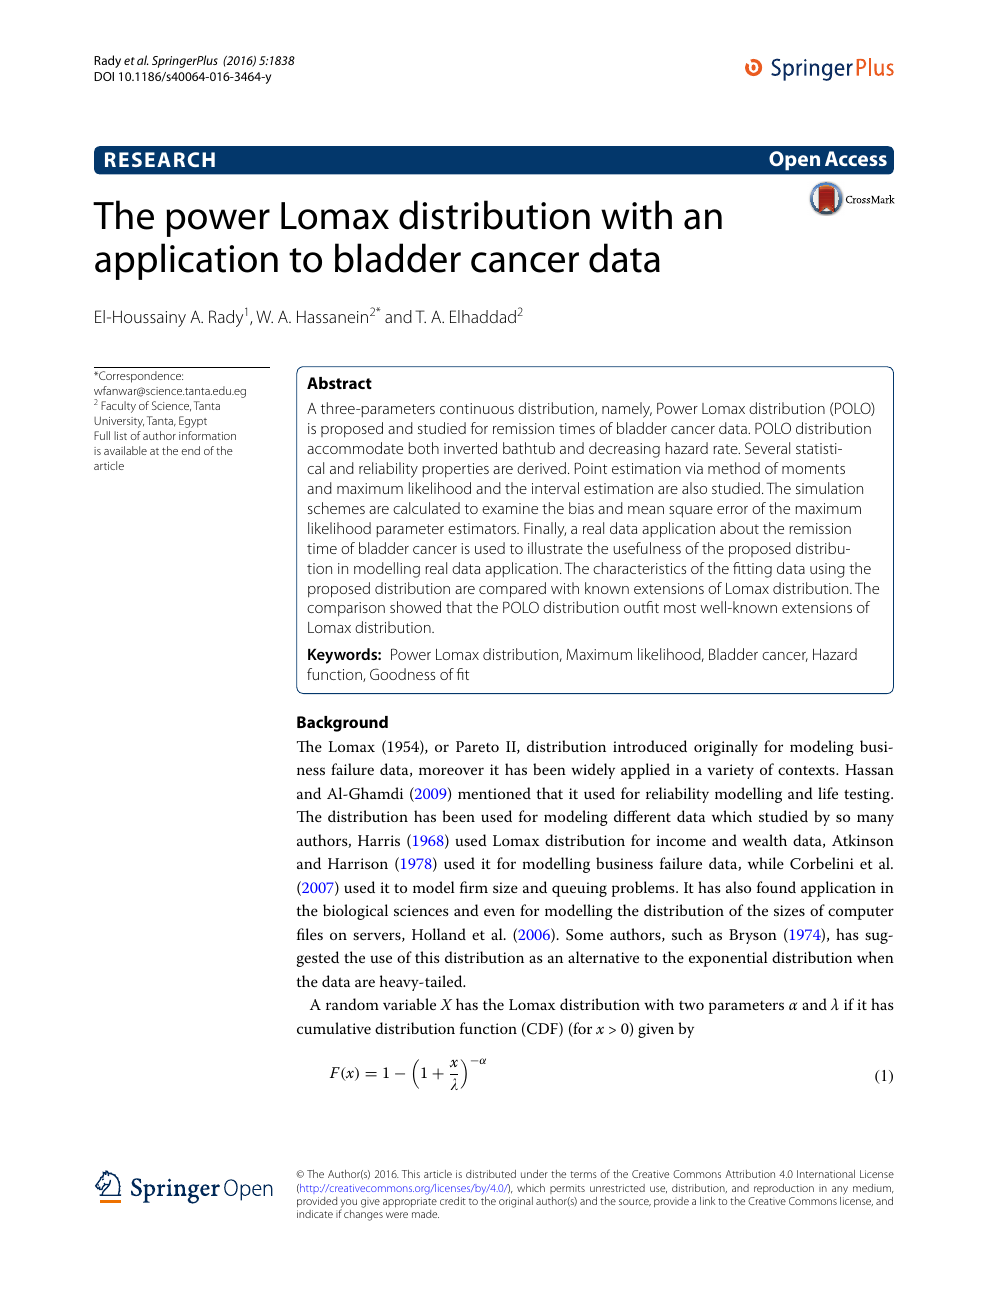 lomax distribution